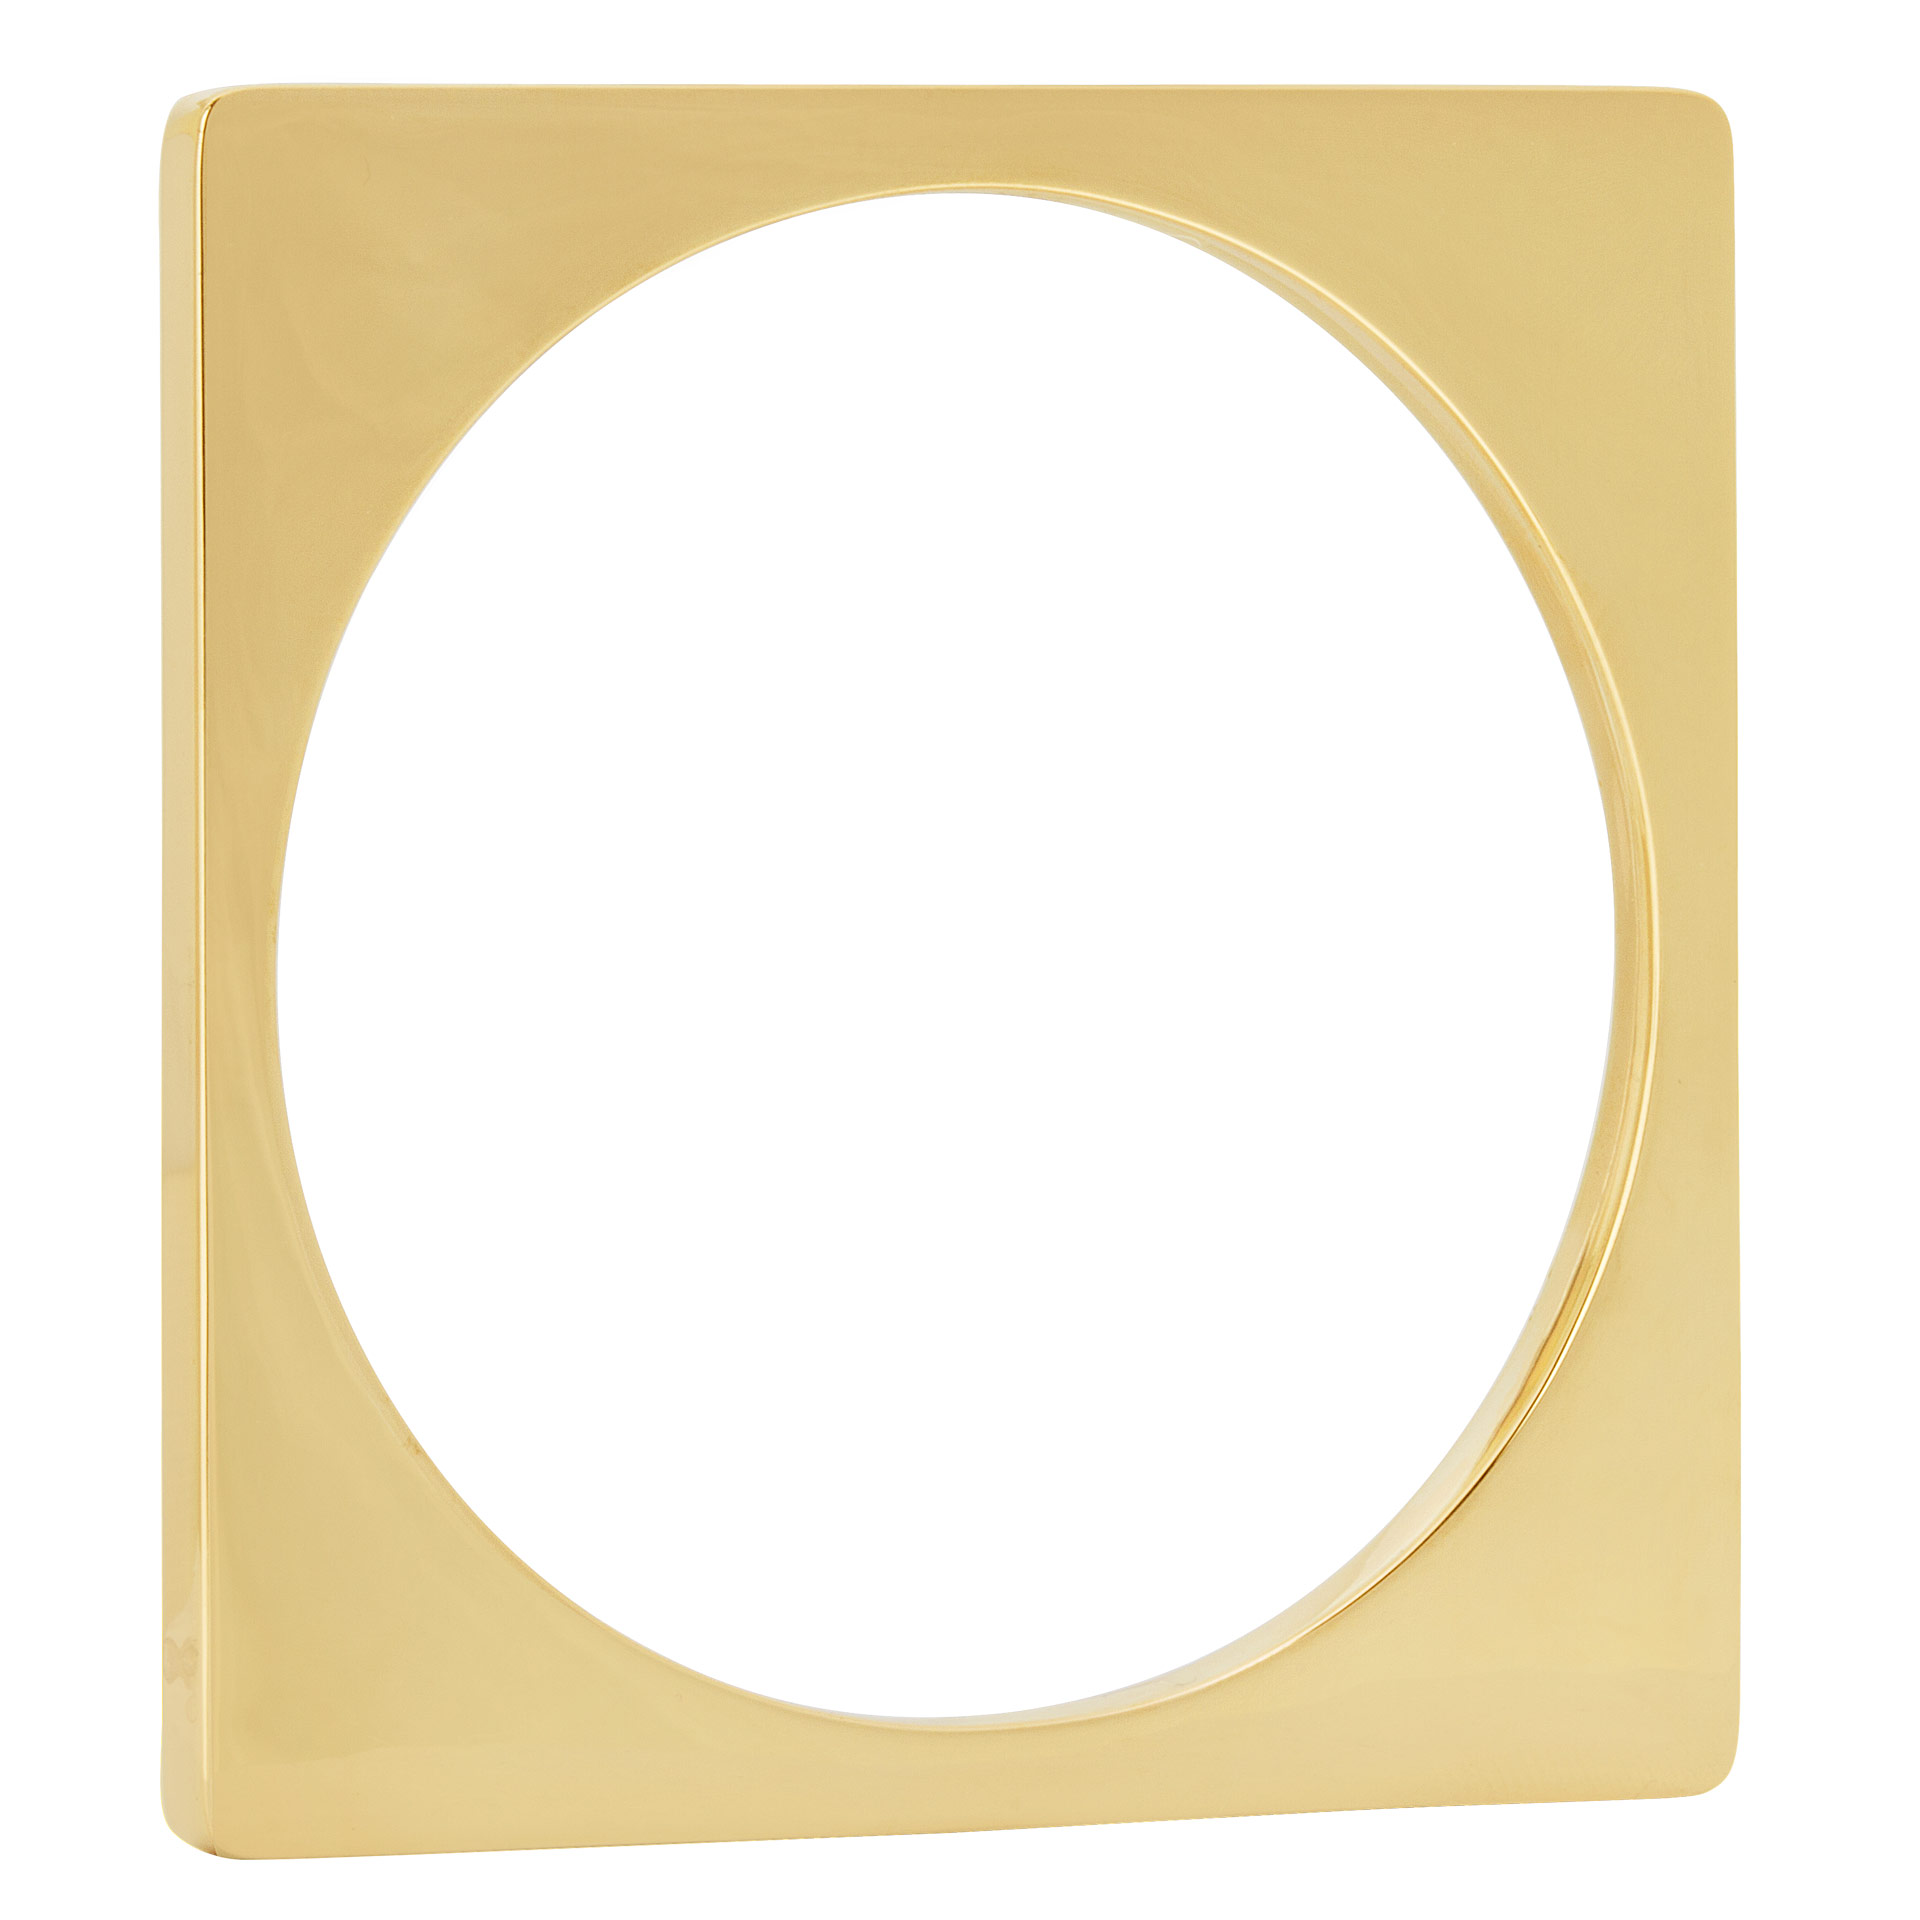 Designer signed "Oswaldo Guayasamin" modern square bangle in 18K yellow gold